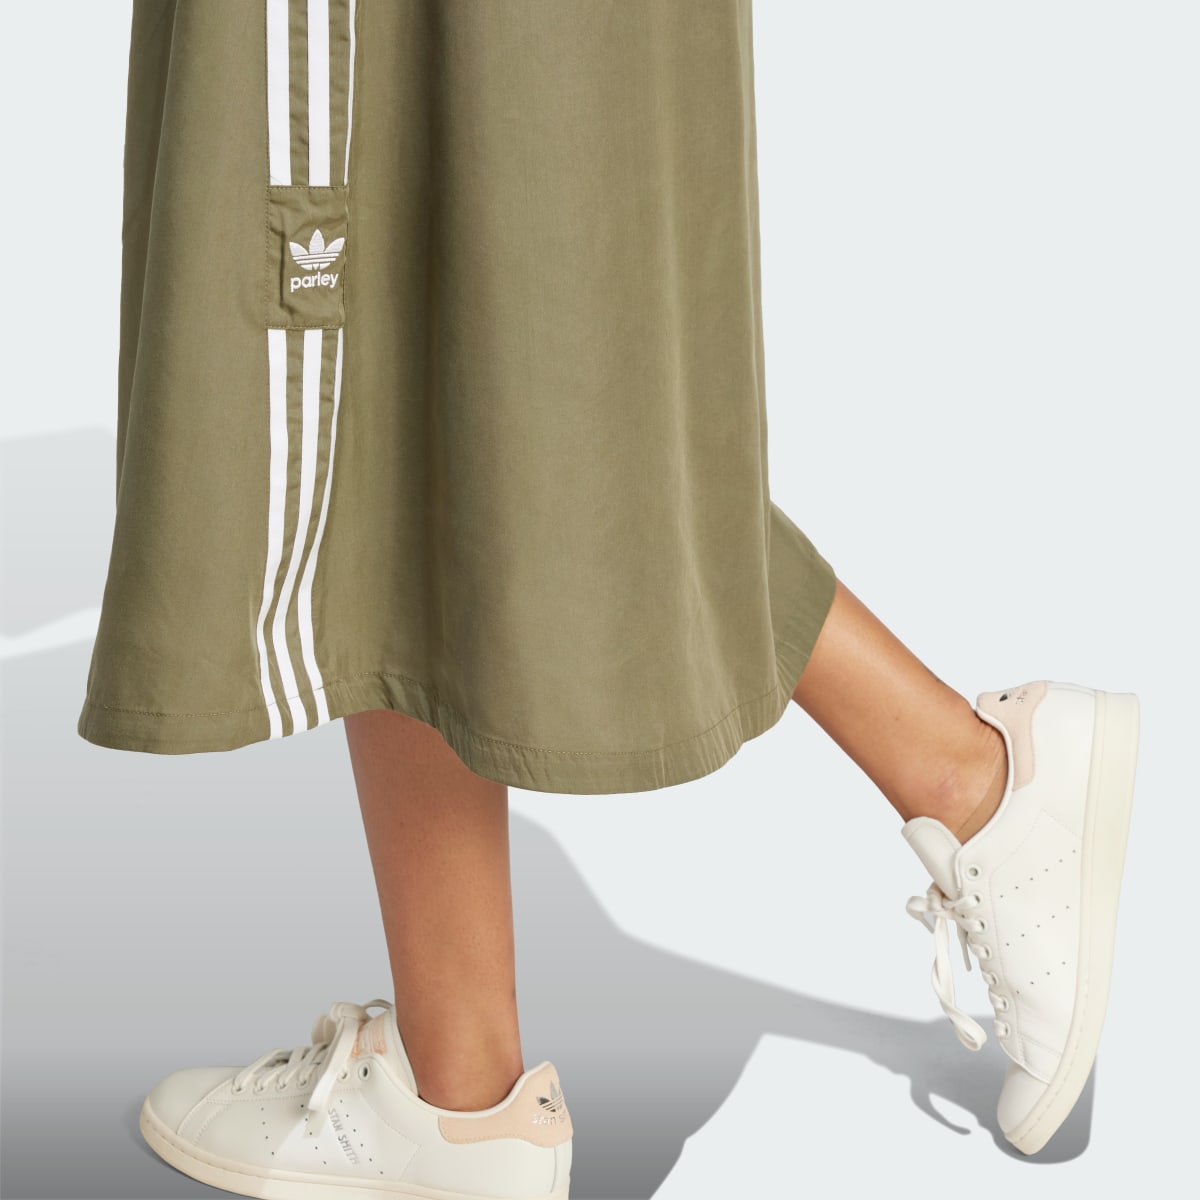 Adidas Parley Skirt. 7